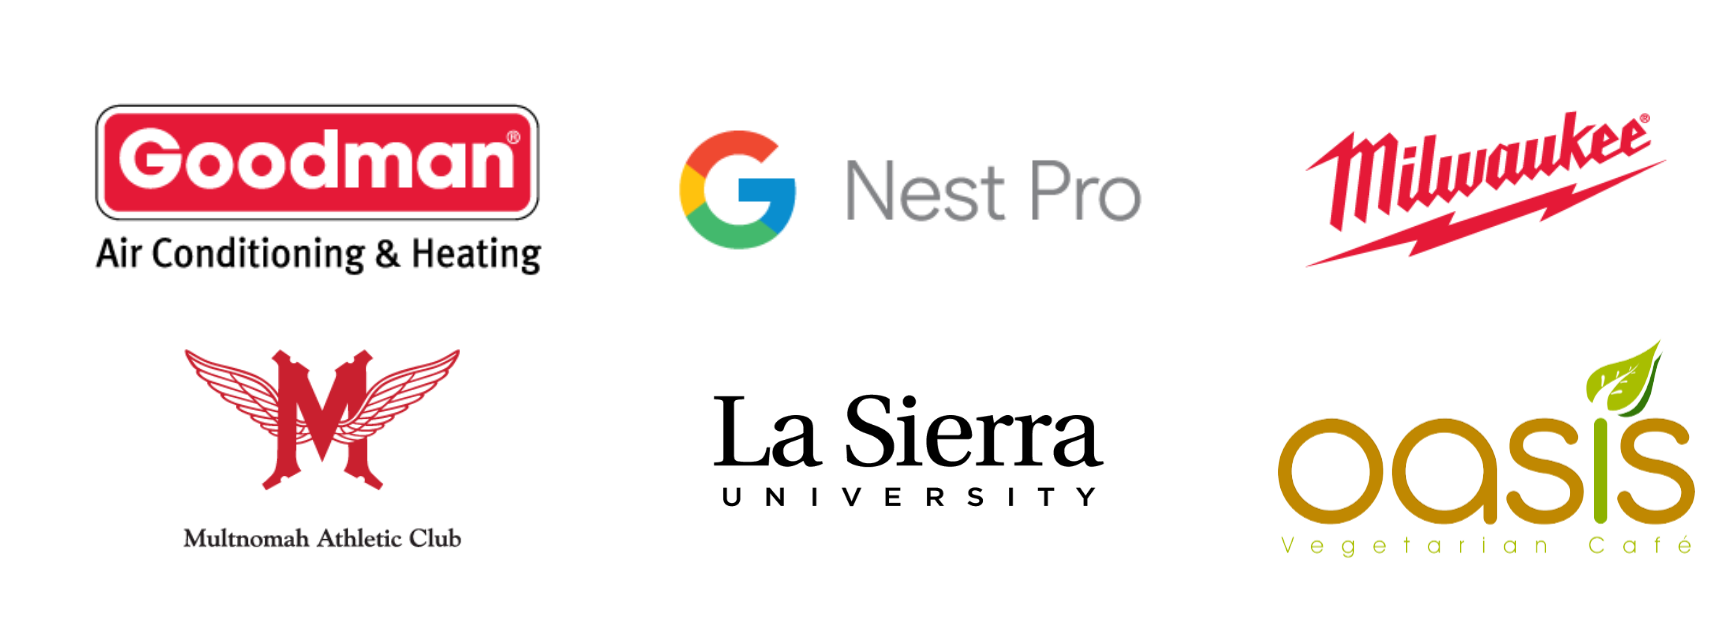 Goodman, Google Nest Pro, Milwaukee, Multnomah Athletic Club, La Sierra University, and Oasis Vegetarian Cafe Logos